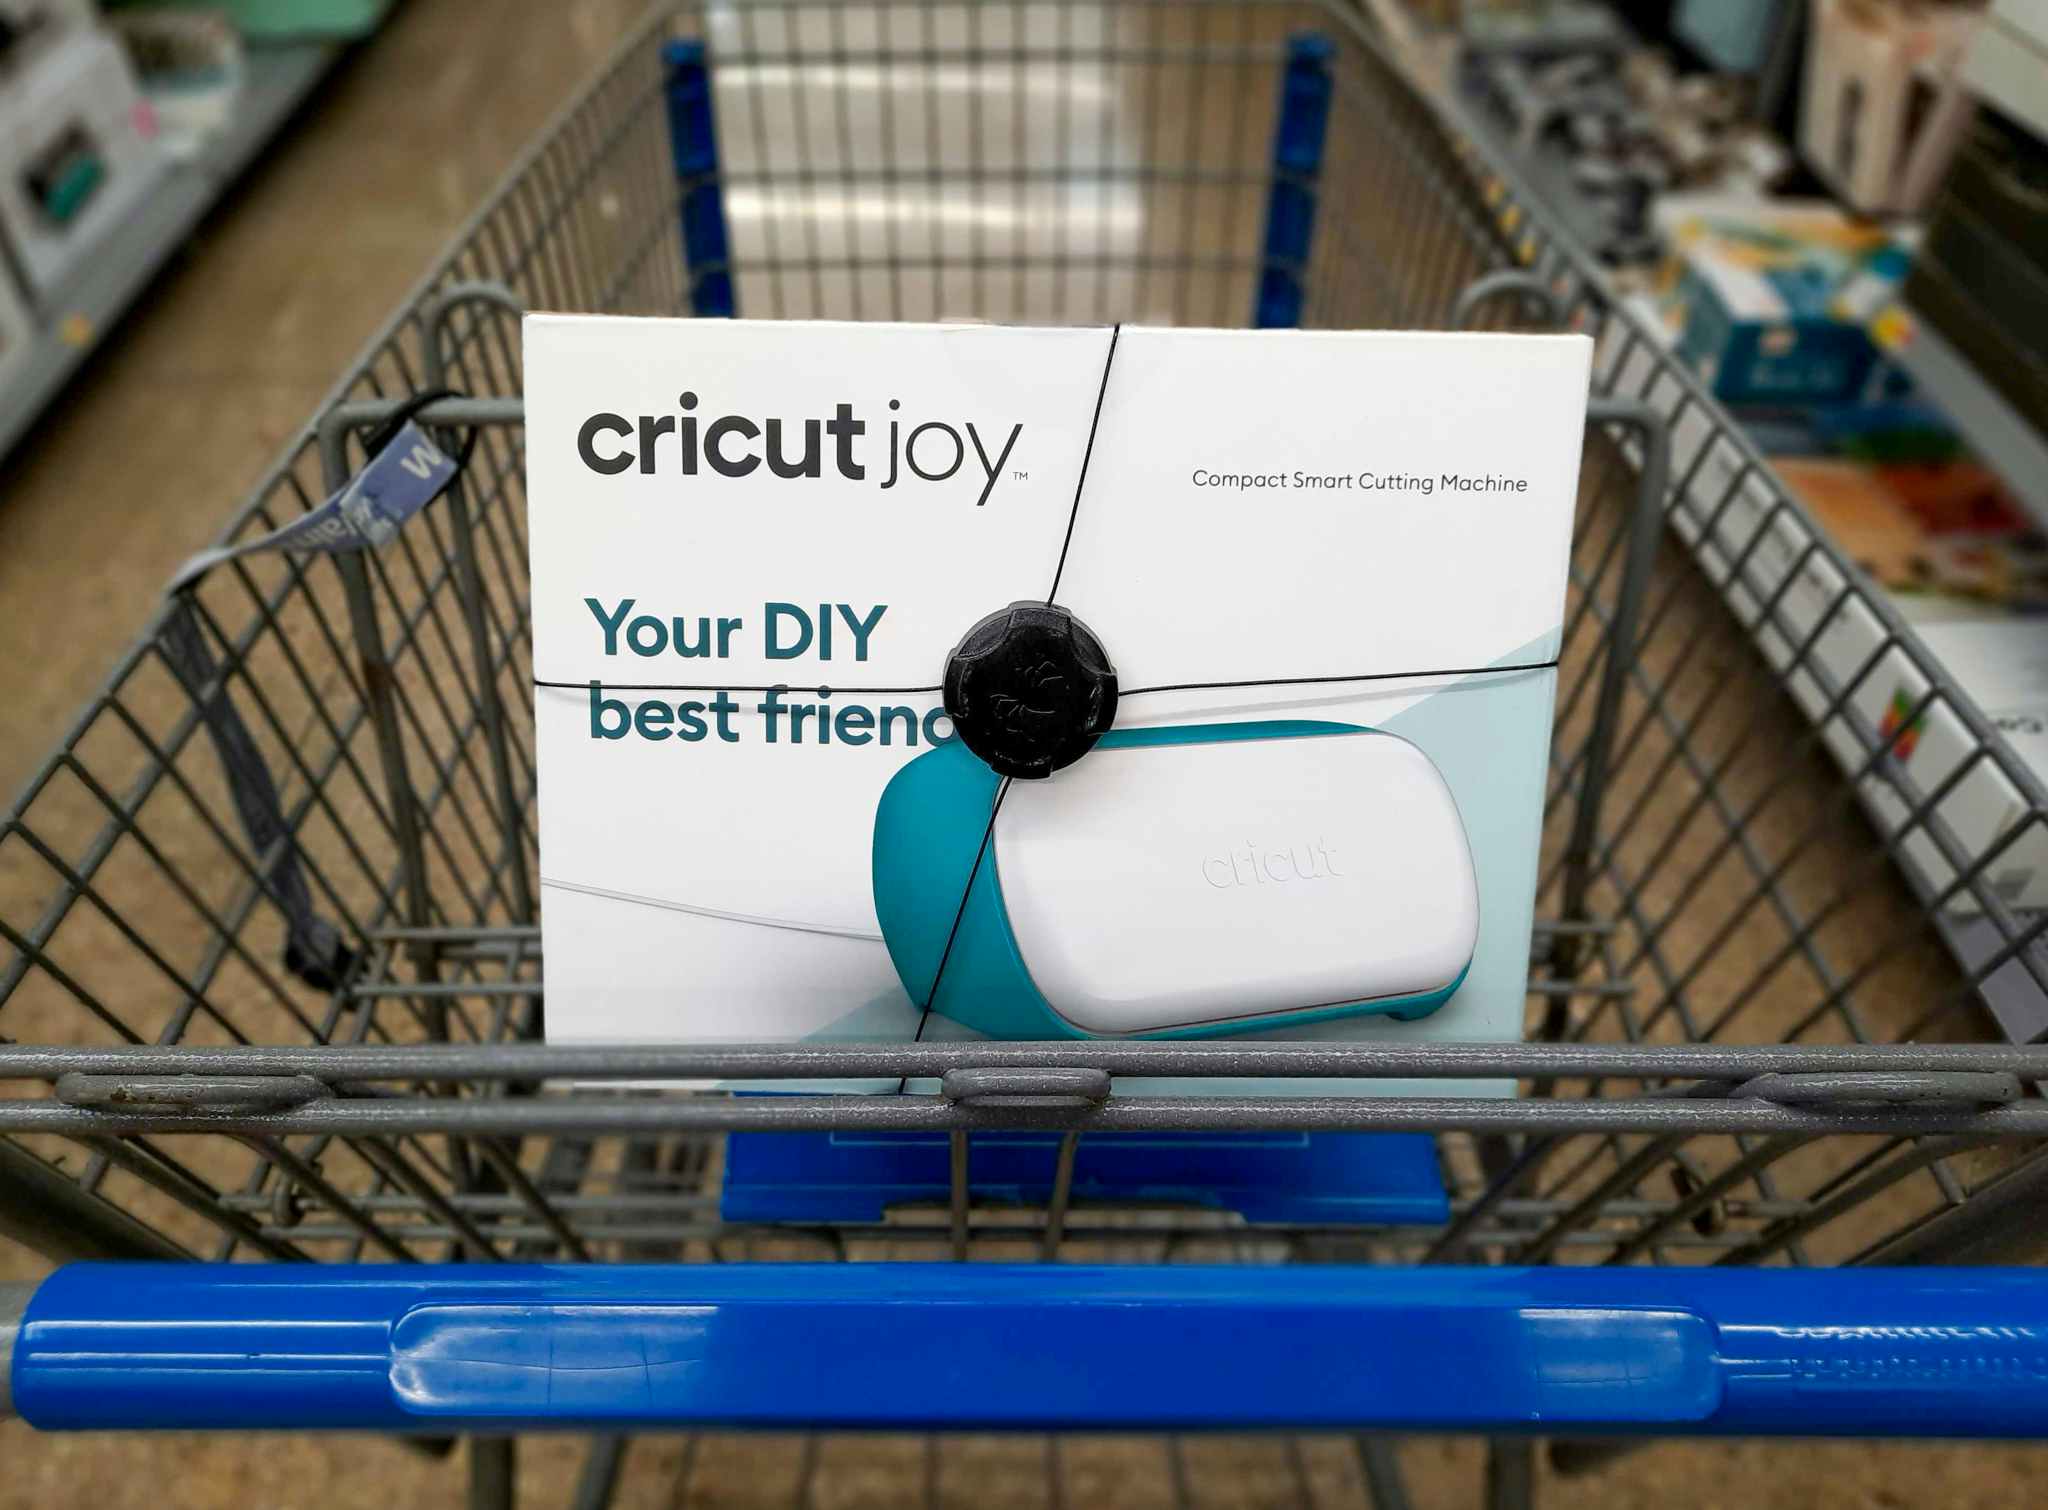 Cricut Joy in the front of a Walmart shopping cart